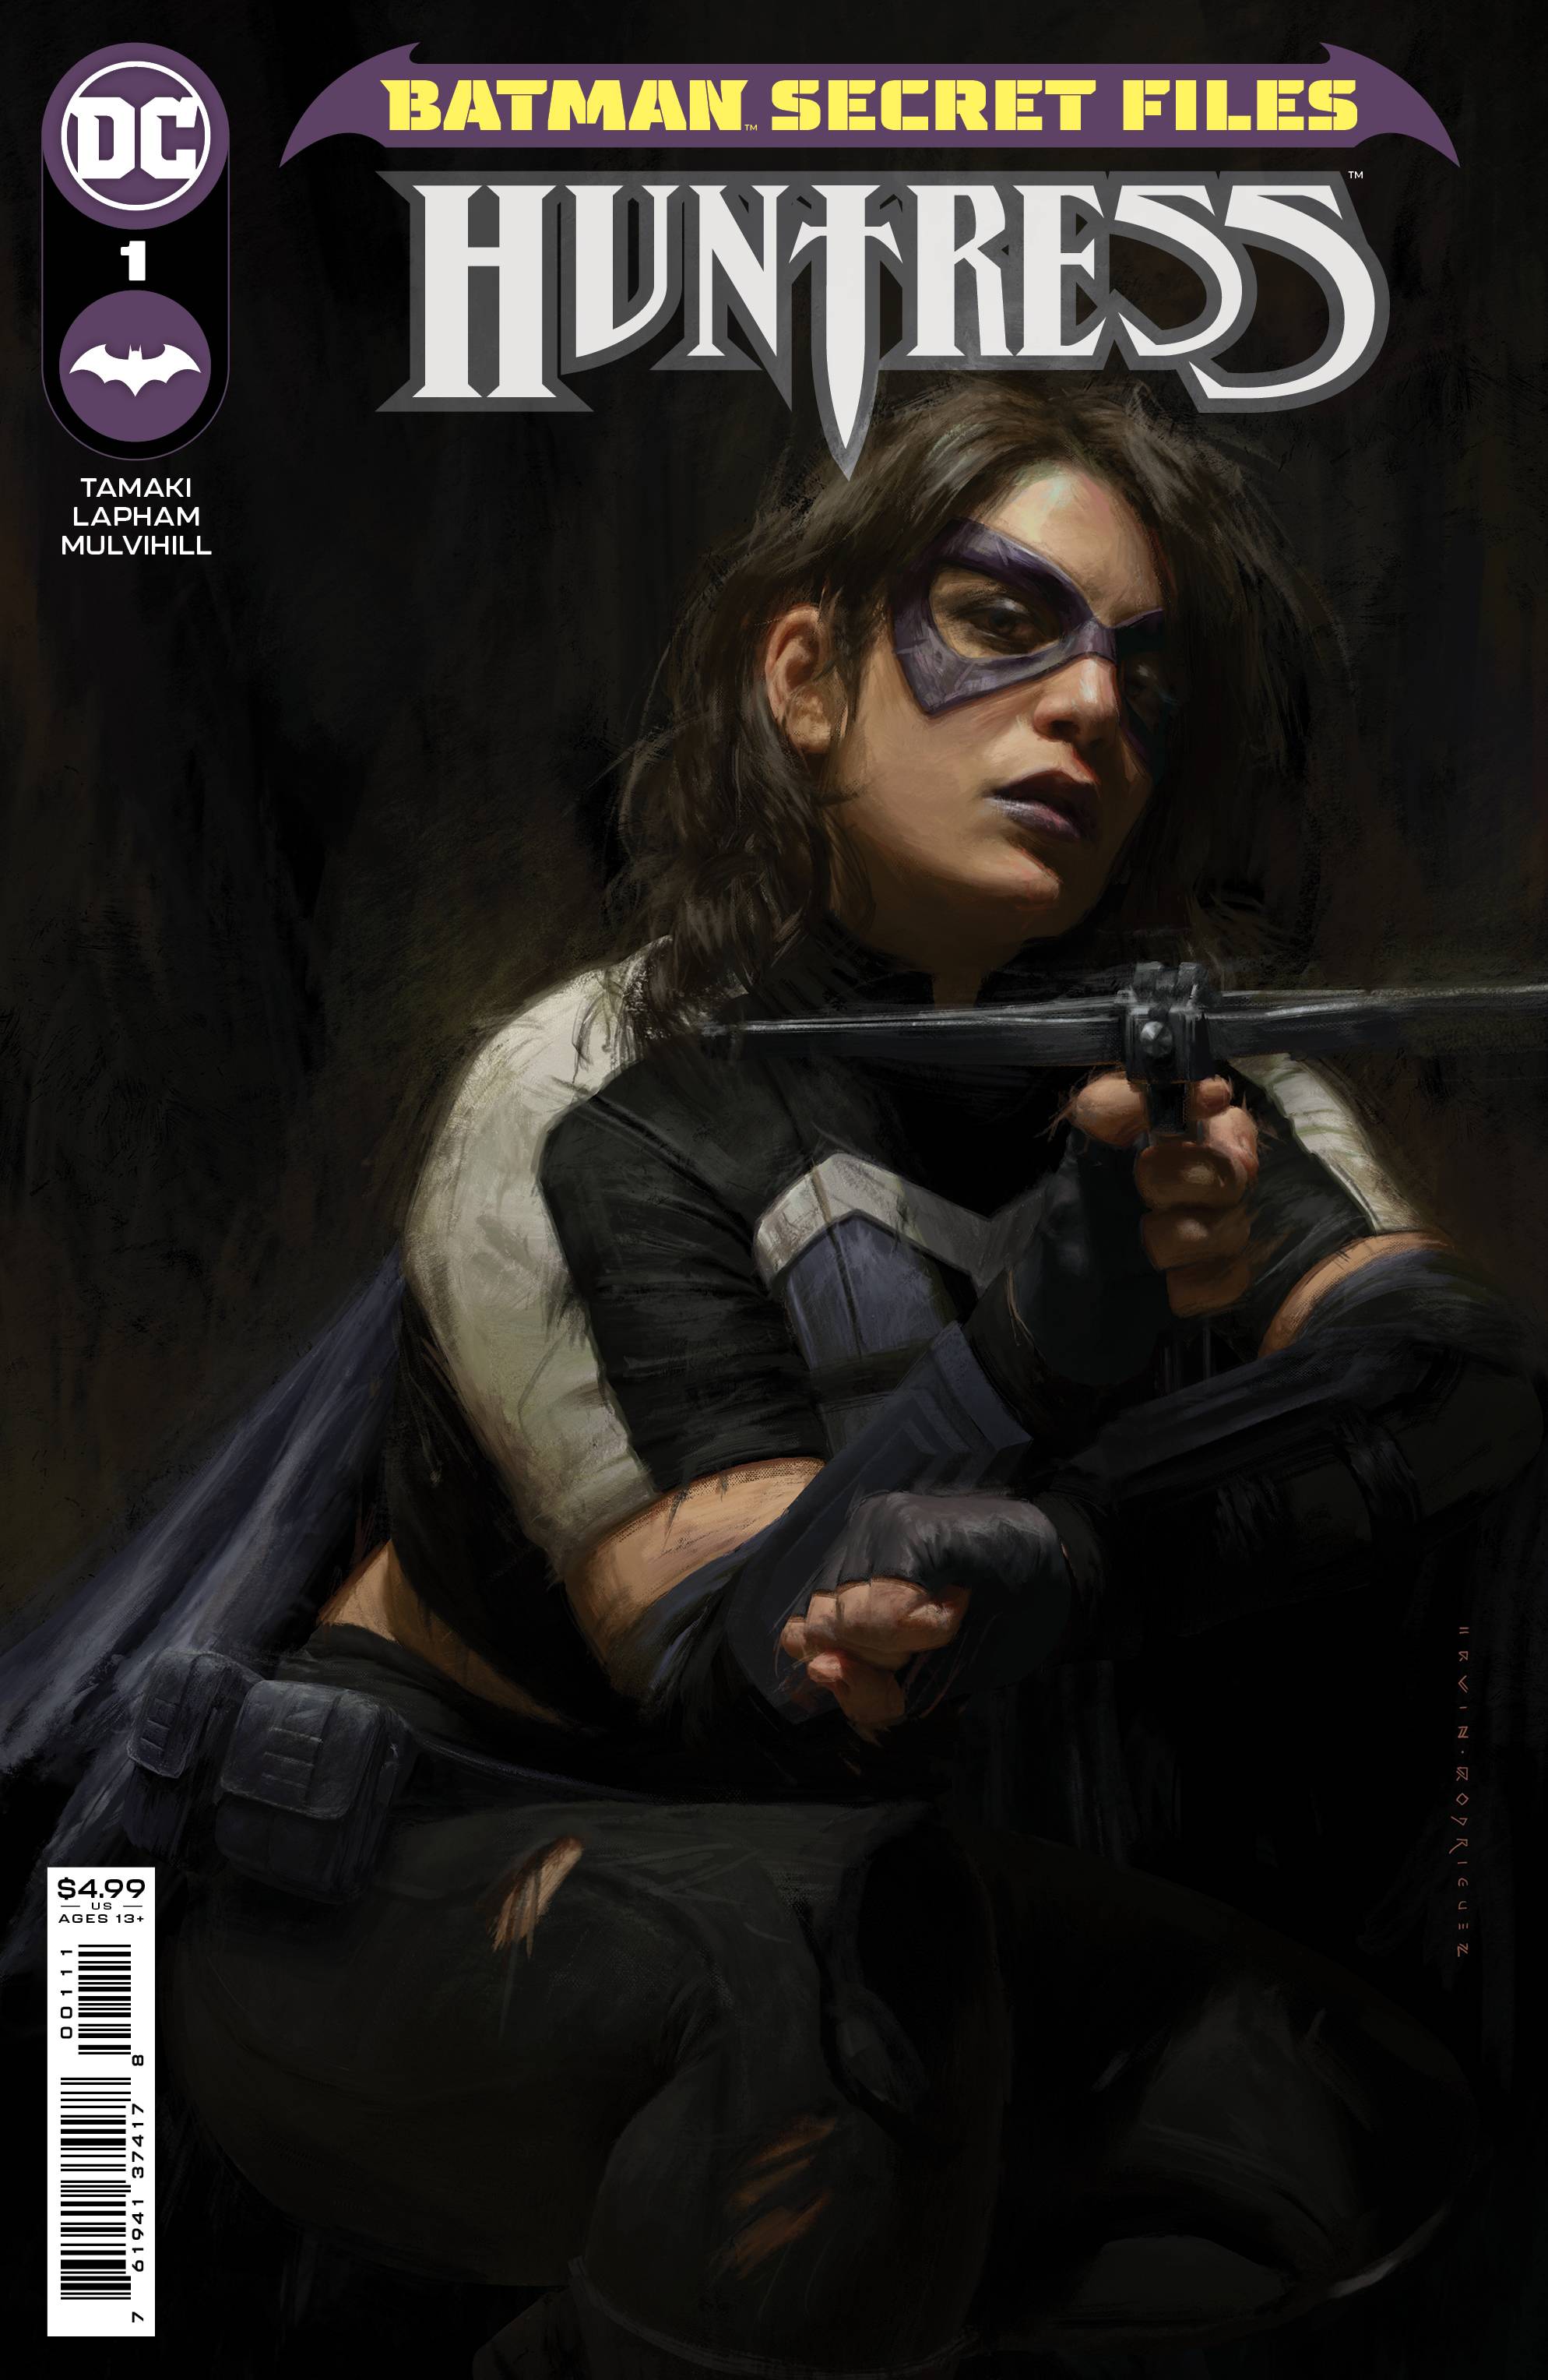 BATMAN SECRET FILES HUNTRESS #1 CVR A RODRIGUEZ | Game Master's Emporium (The New GME)